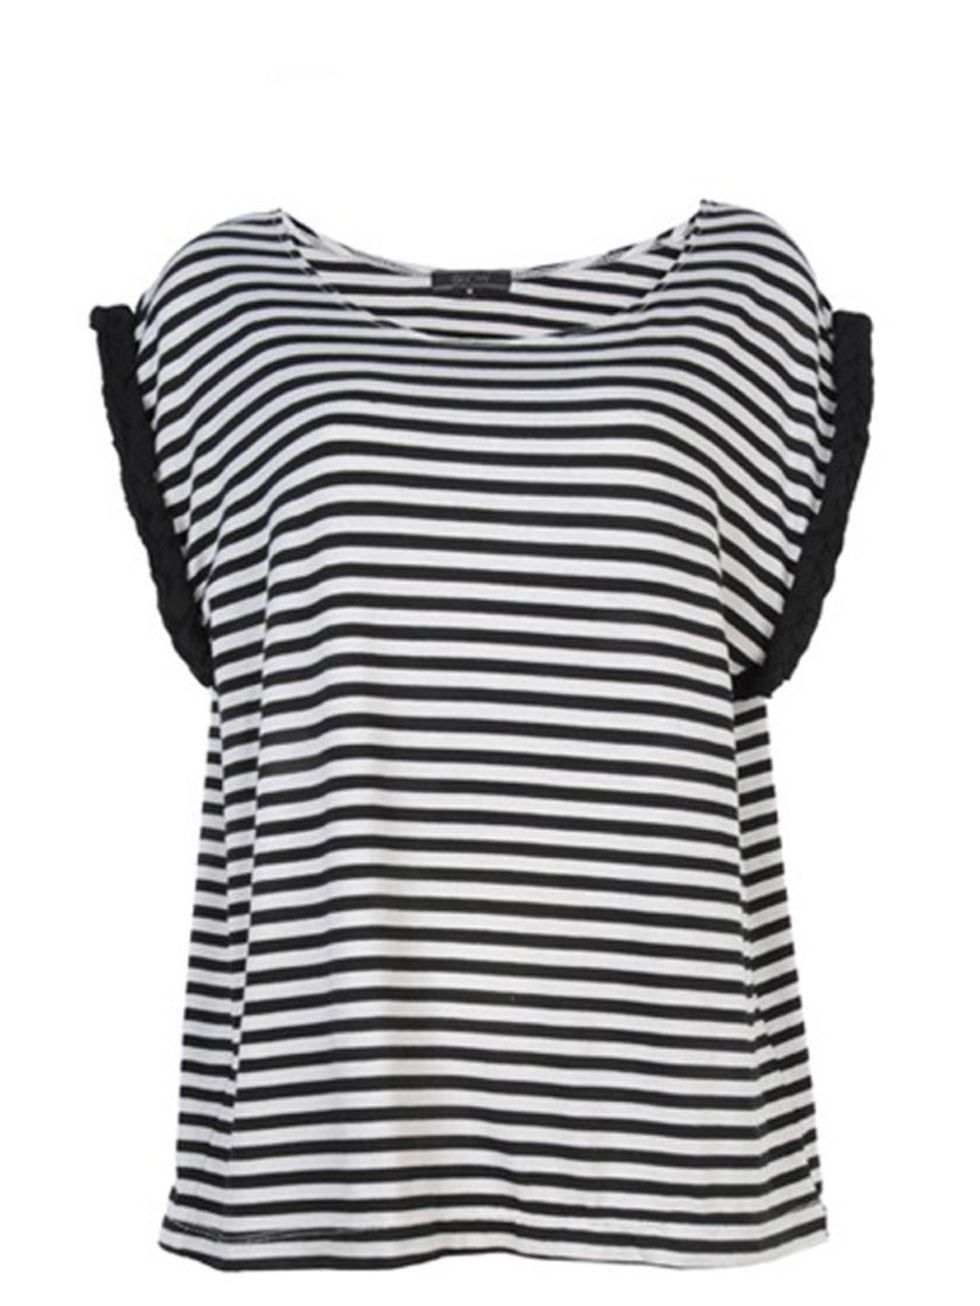 <p>Stripe T-shirt, £25, by Glow at <a href="http://www.pretaportobello.com/shop/tops/tops/glow-striped-plait-tee.aspx">Pretaportobello</a></p>